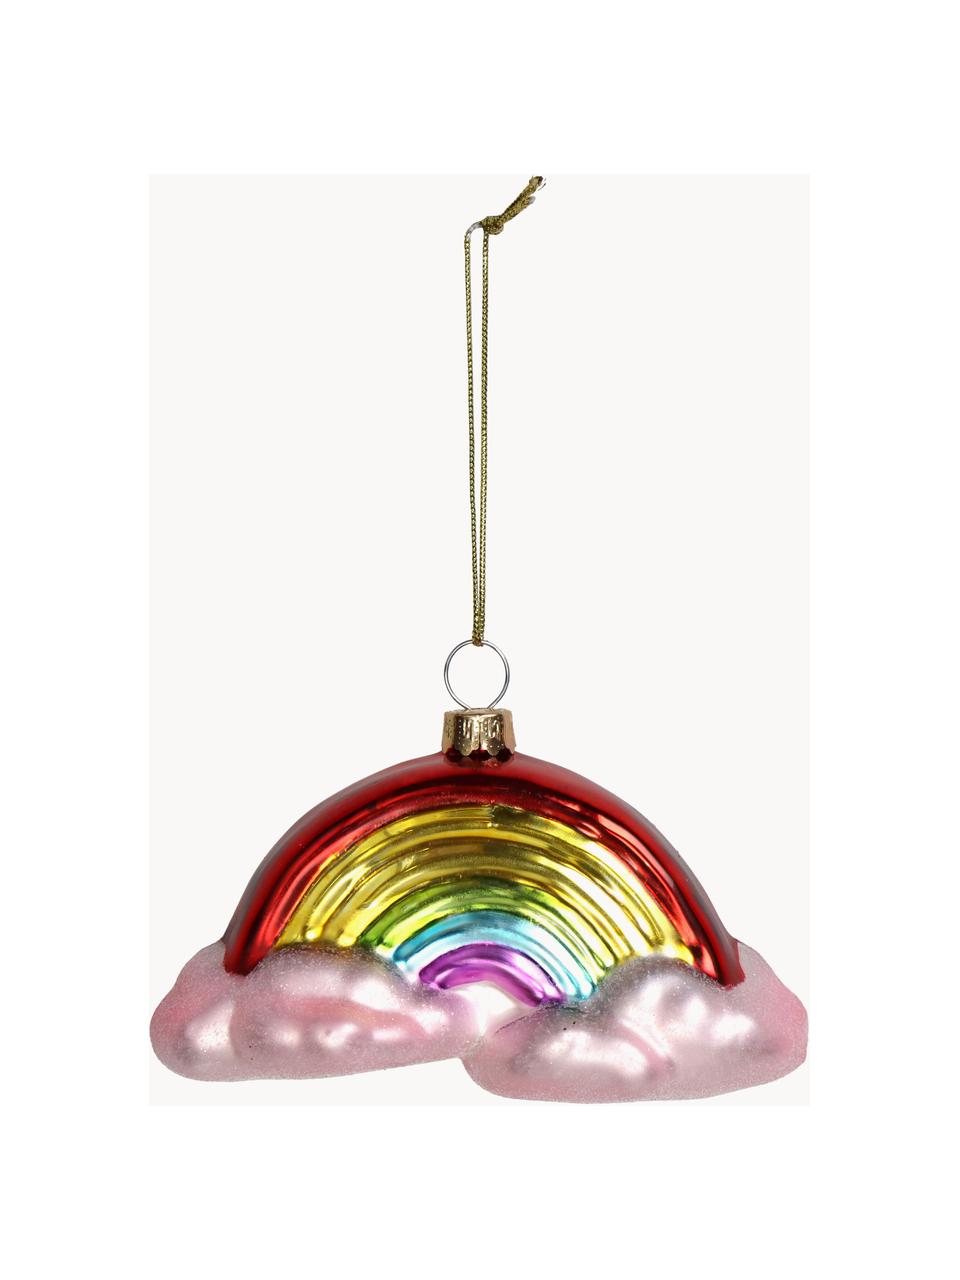 Baumanhänger Rainbow, Glas, Bunt, B 11 x H 6 cm